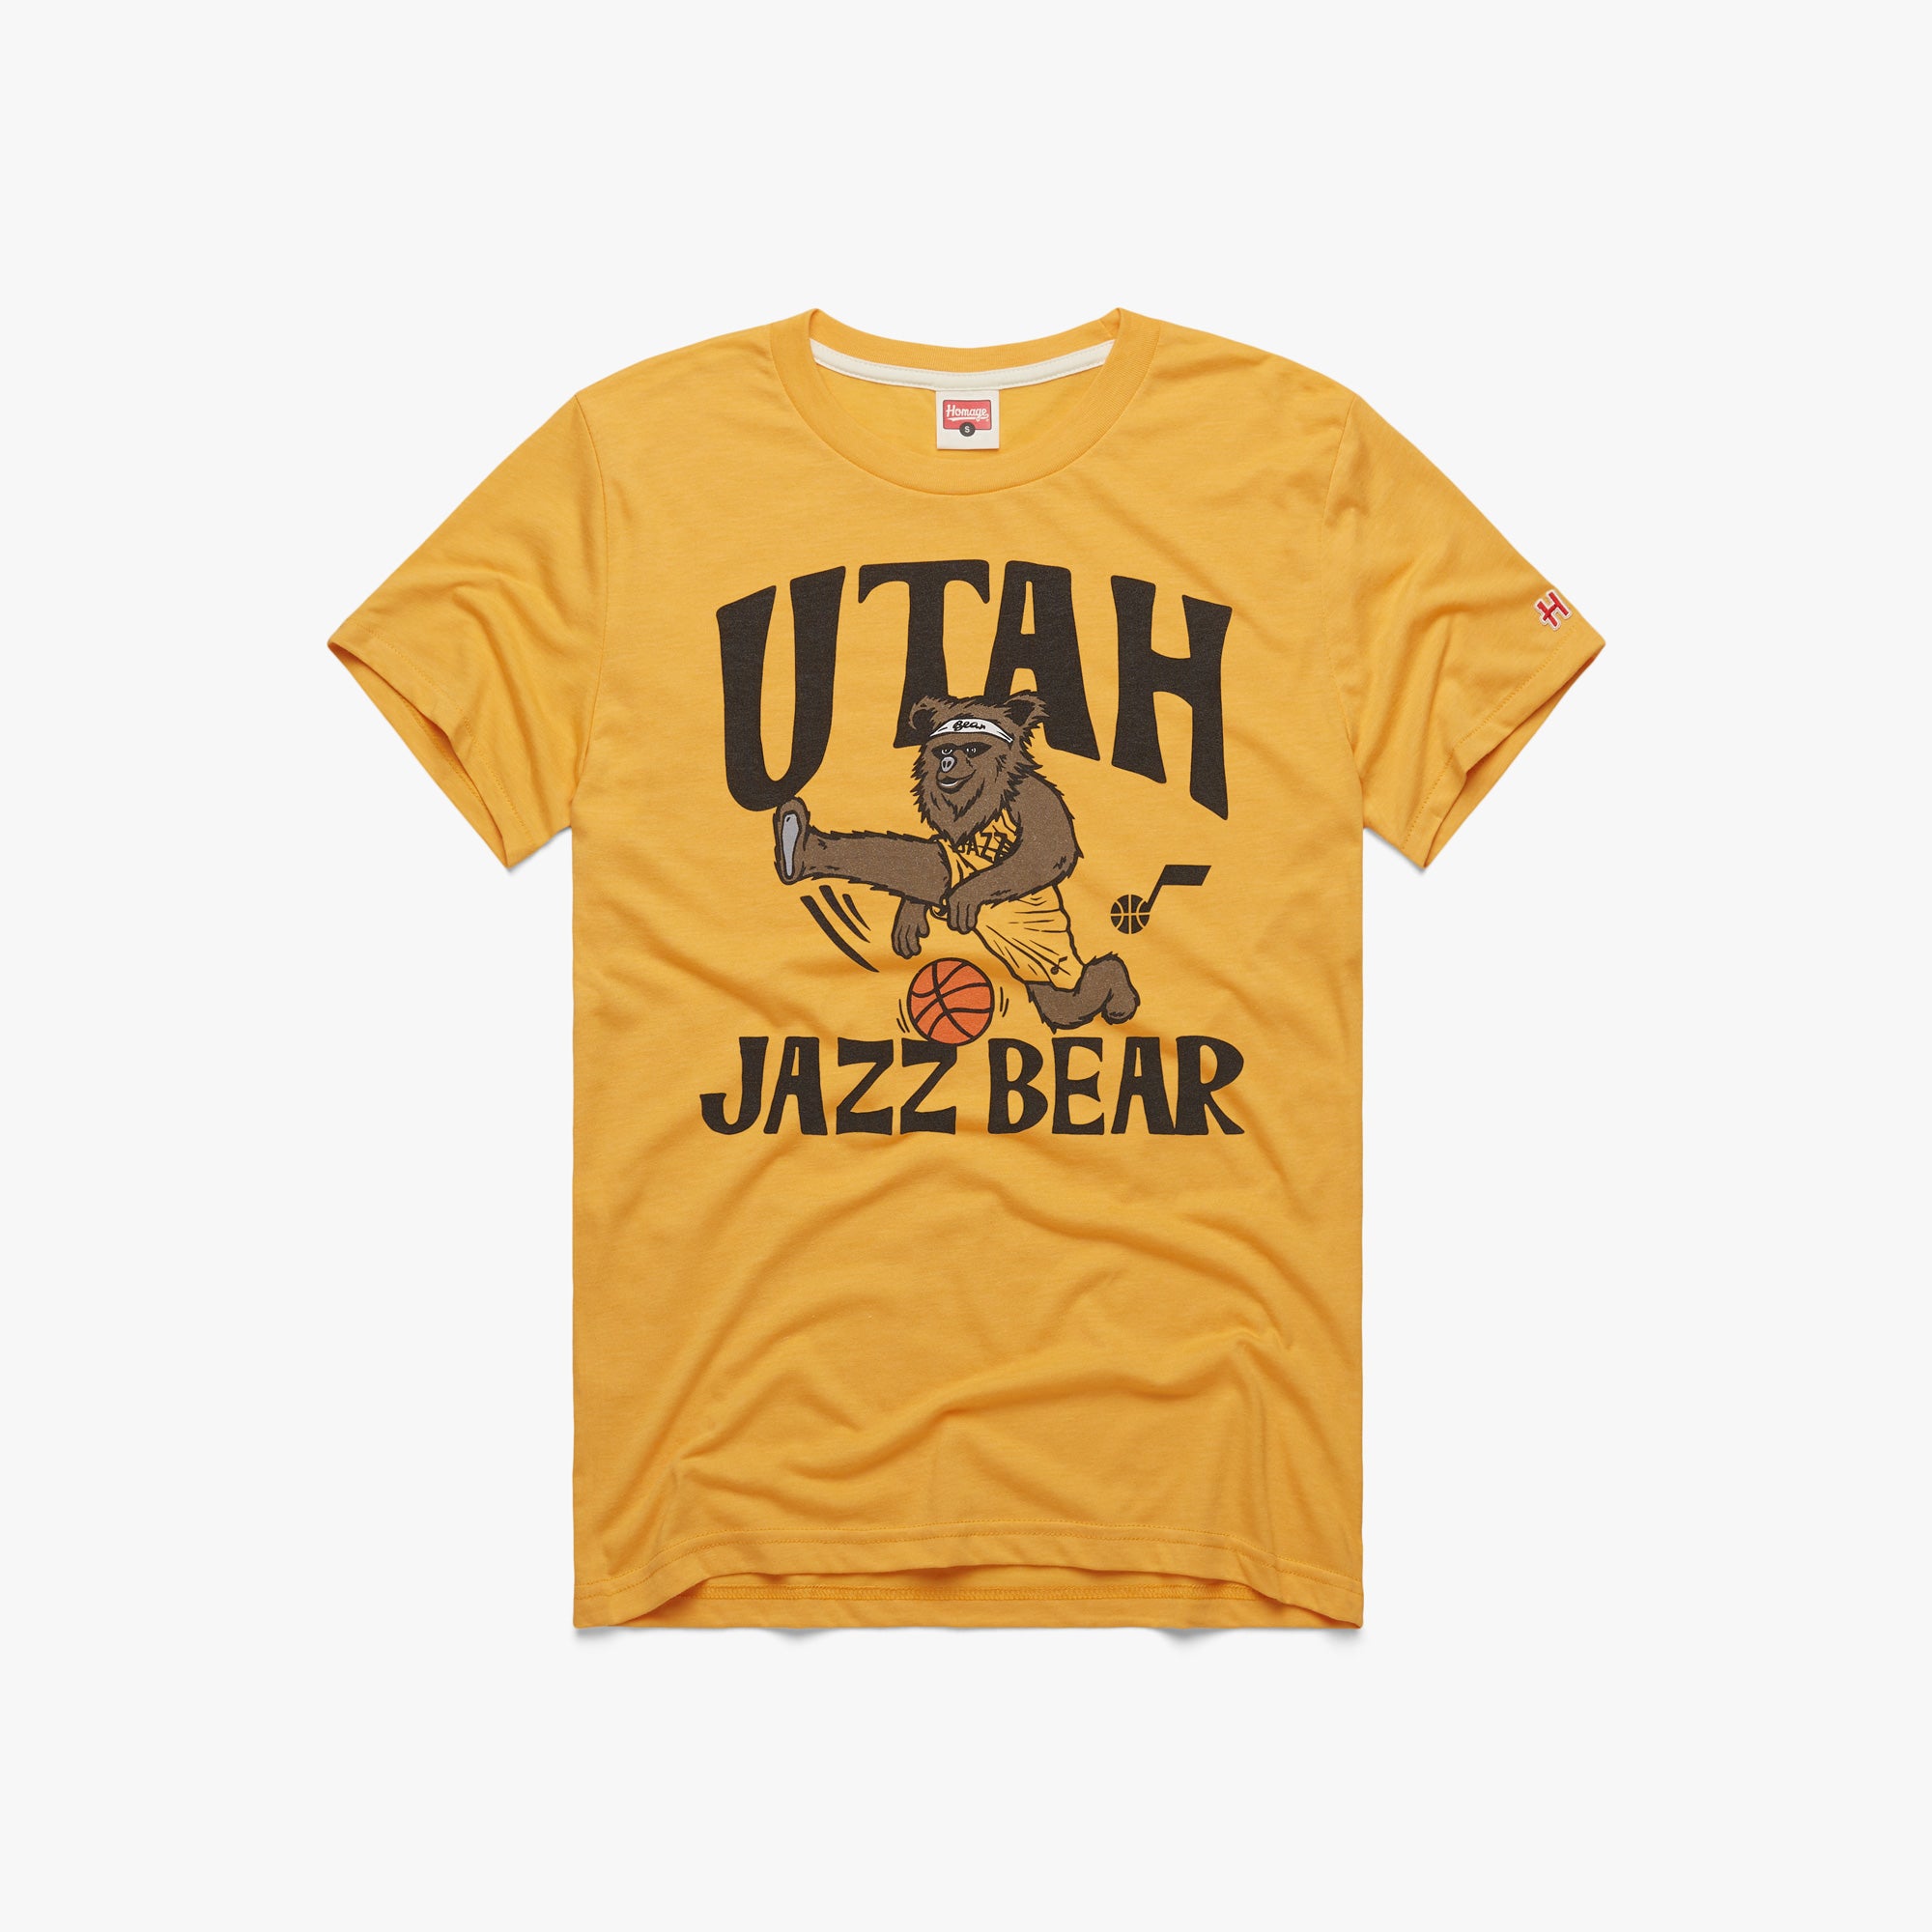 Utah Jazz Take Note Team Pride shirt - hoodie, shirt, tank top